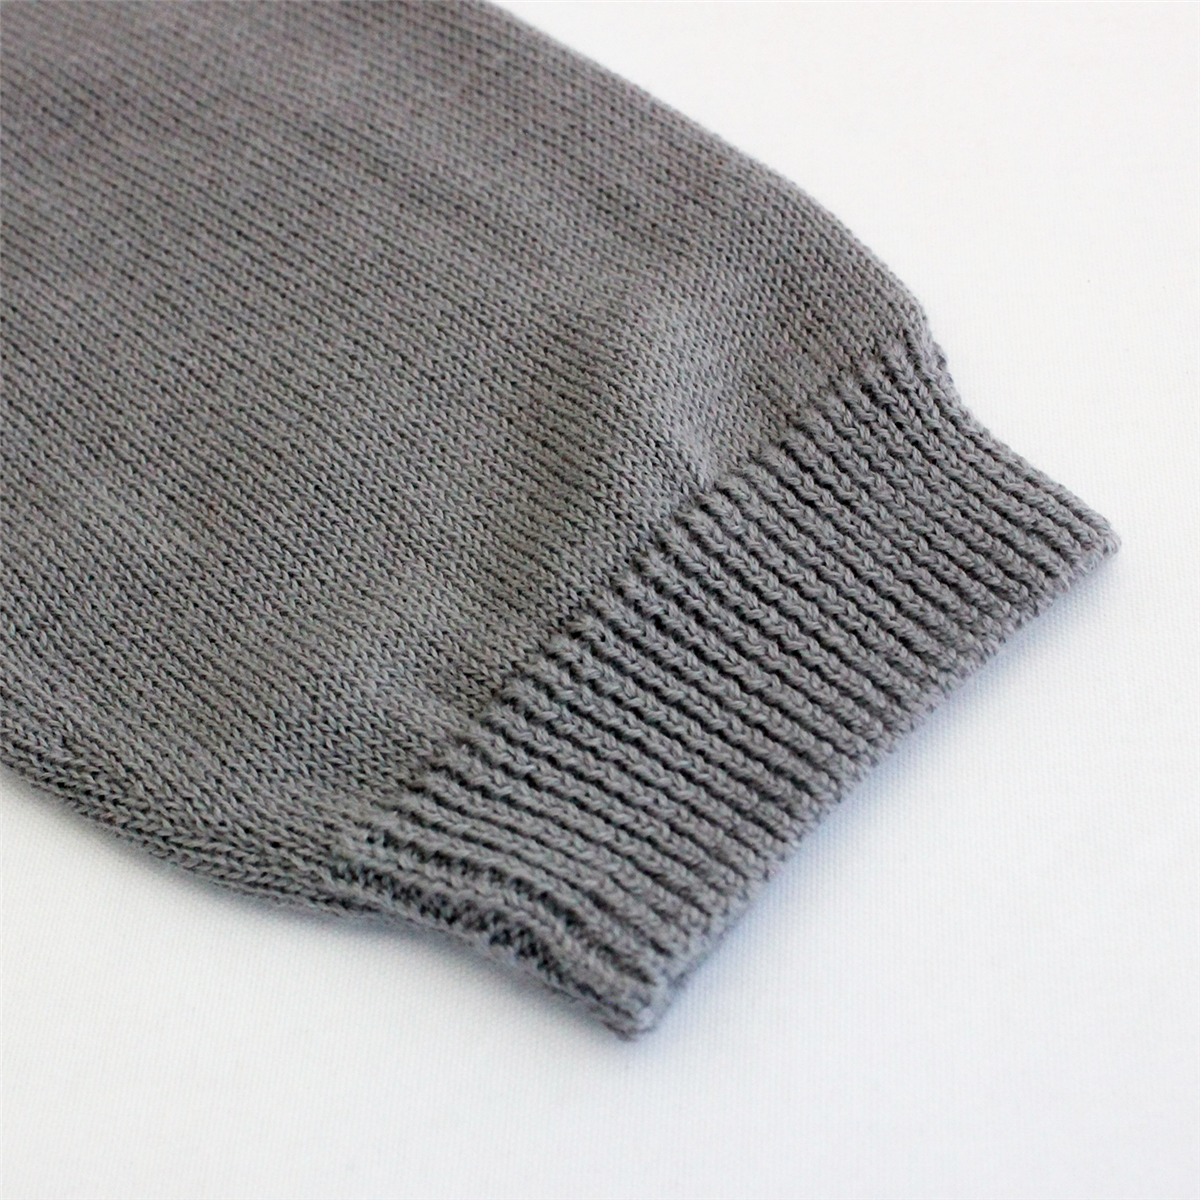 Viverano Organic Cotton Sweater Knit Baby Pants - Grey